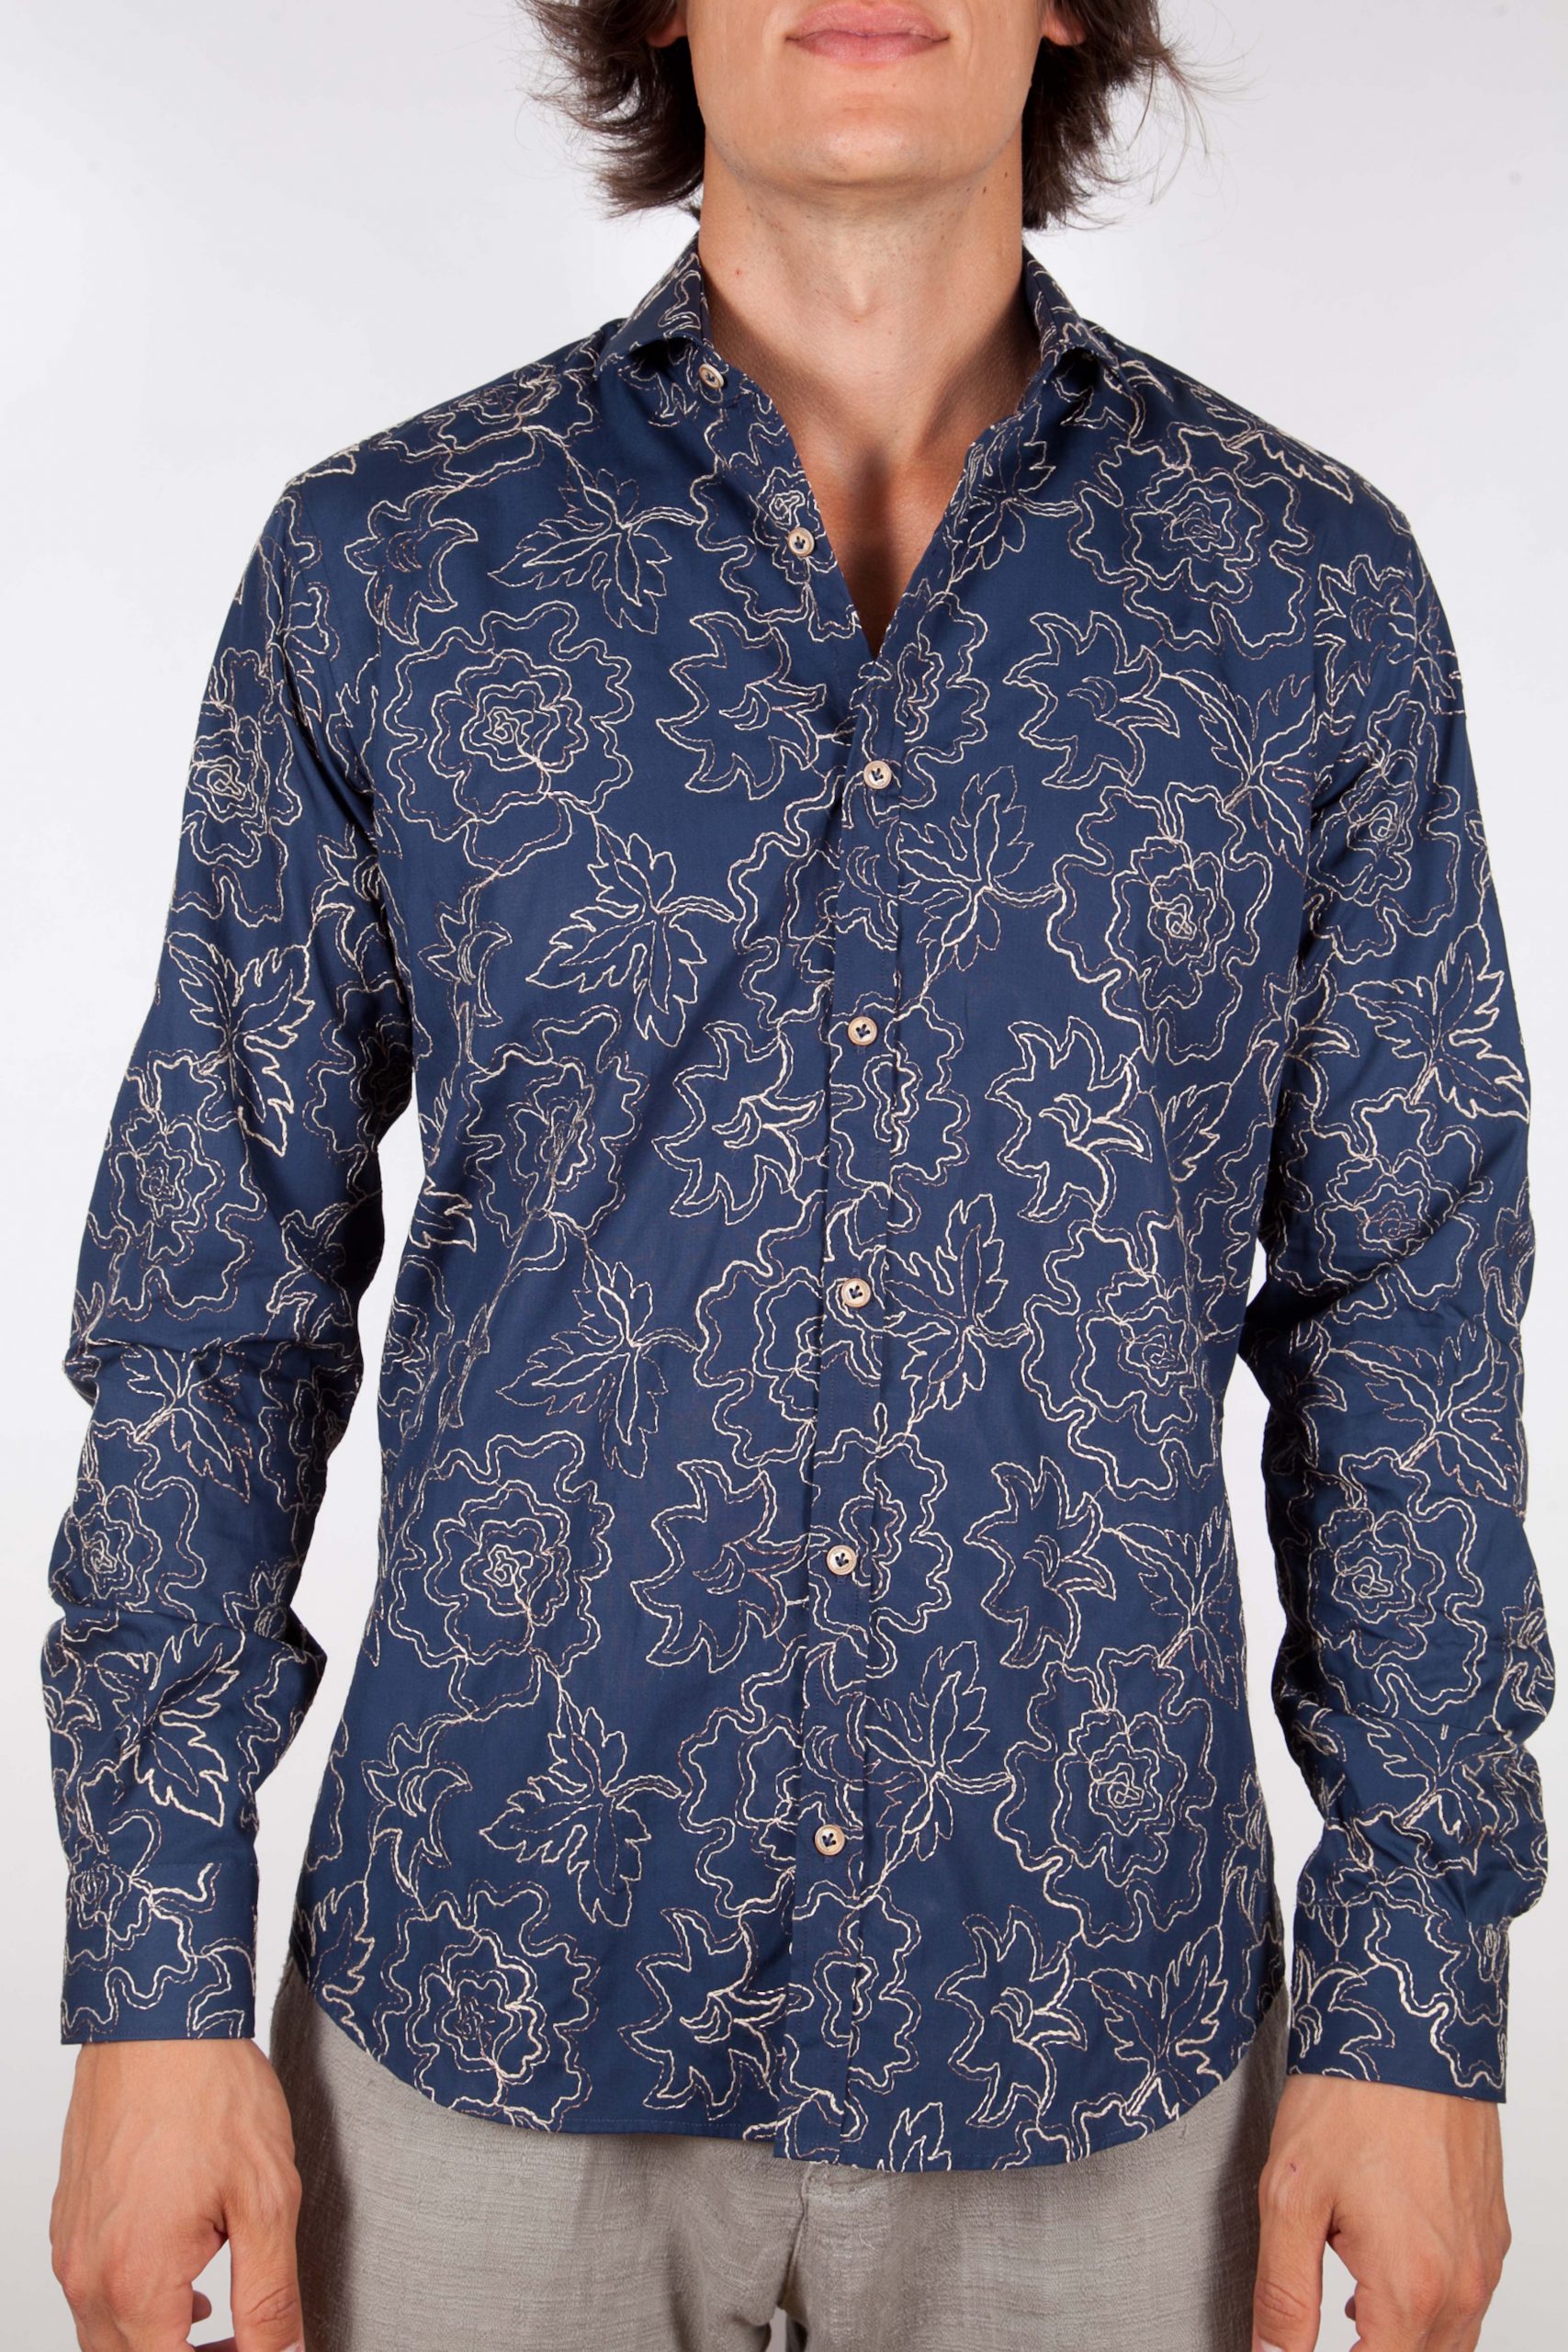 Fashion shirt, soft collar with embroidery - Poggianti camicie